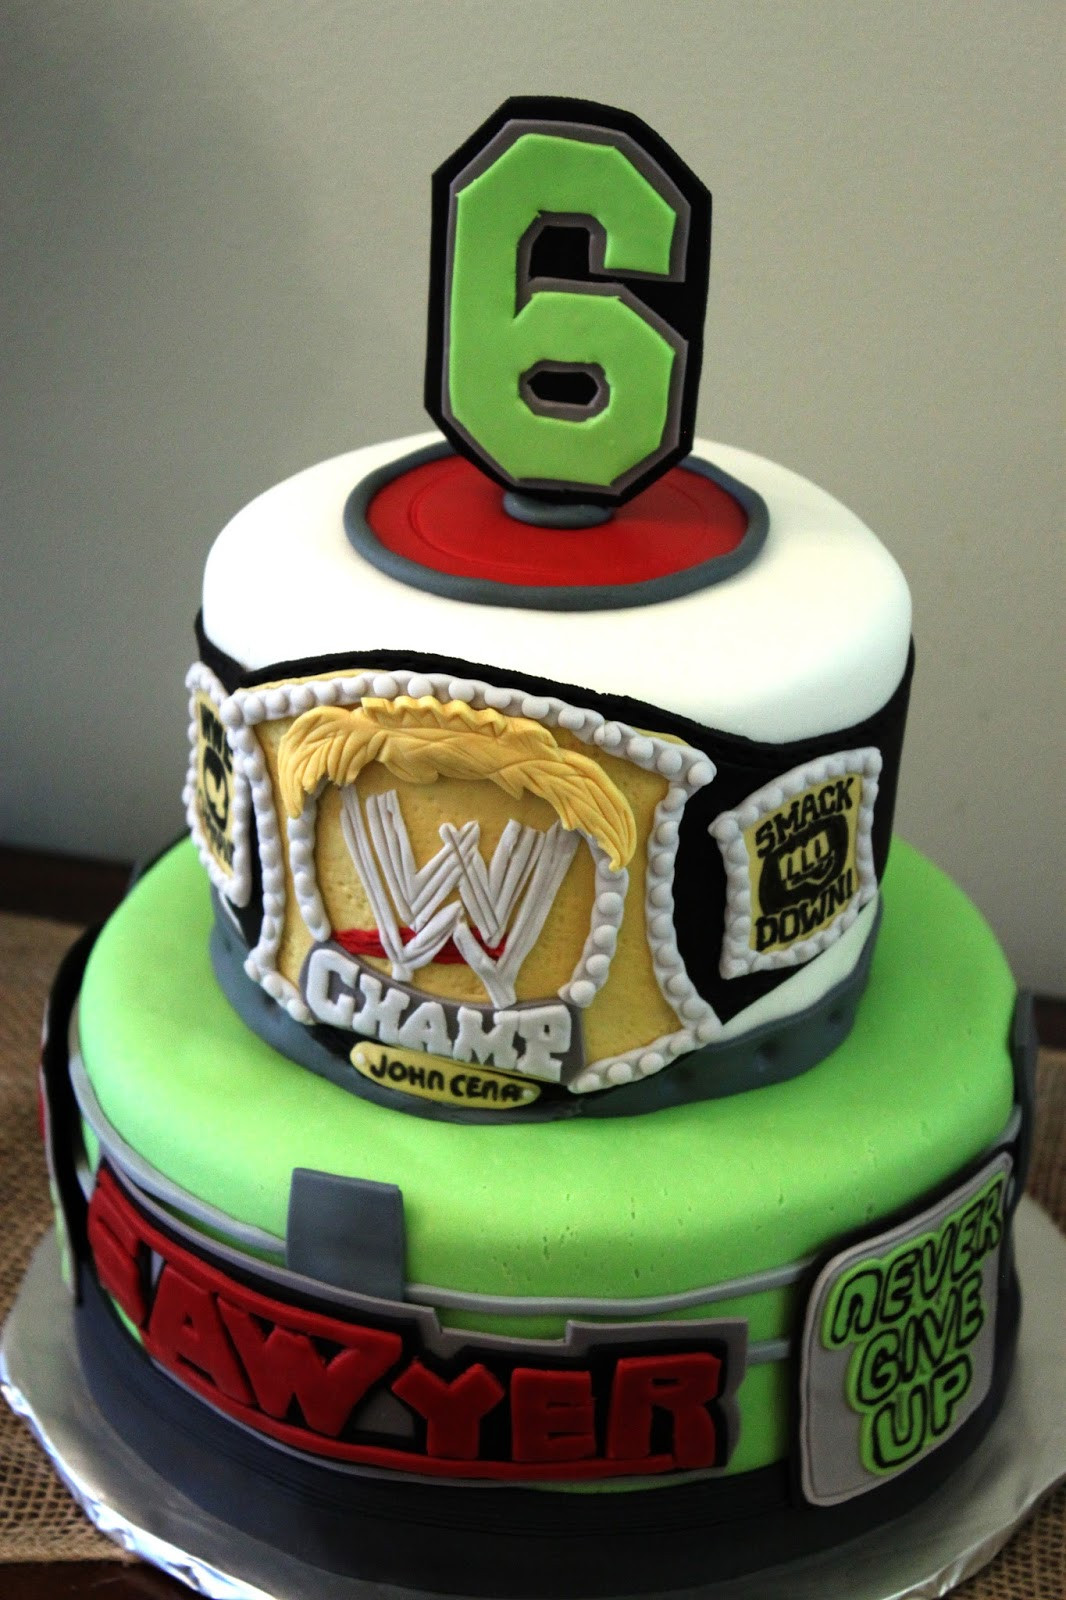 John Cena Birthday Cake
 Layers of Love John Cena cake